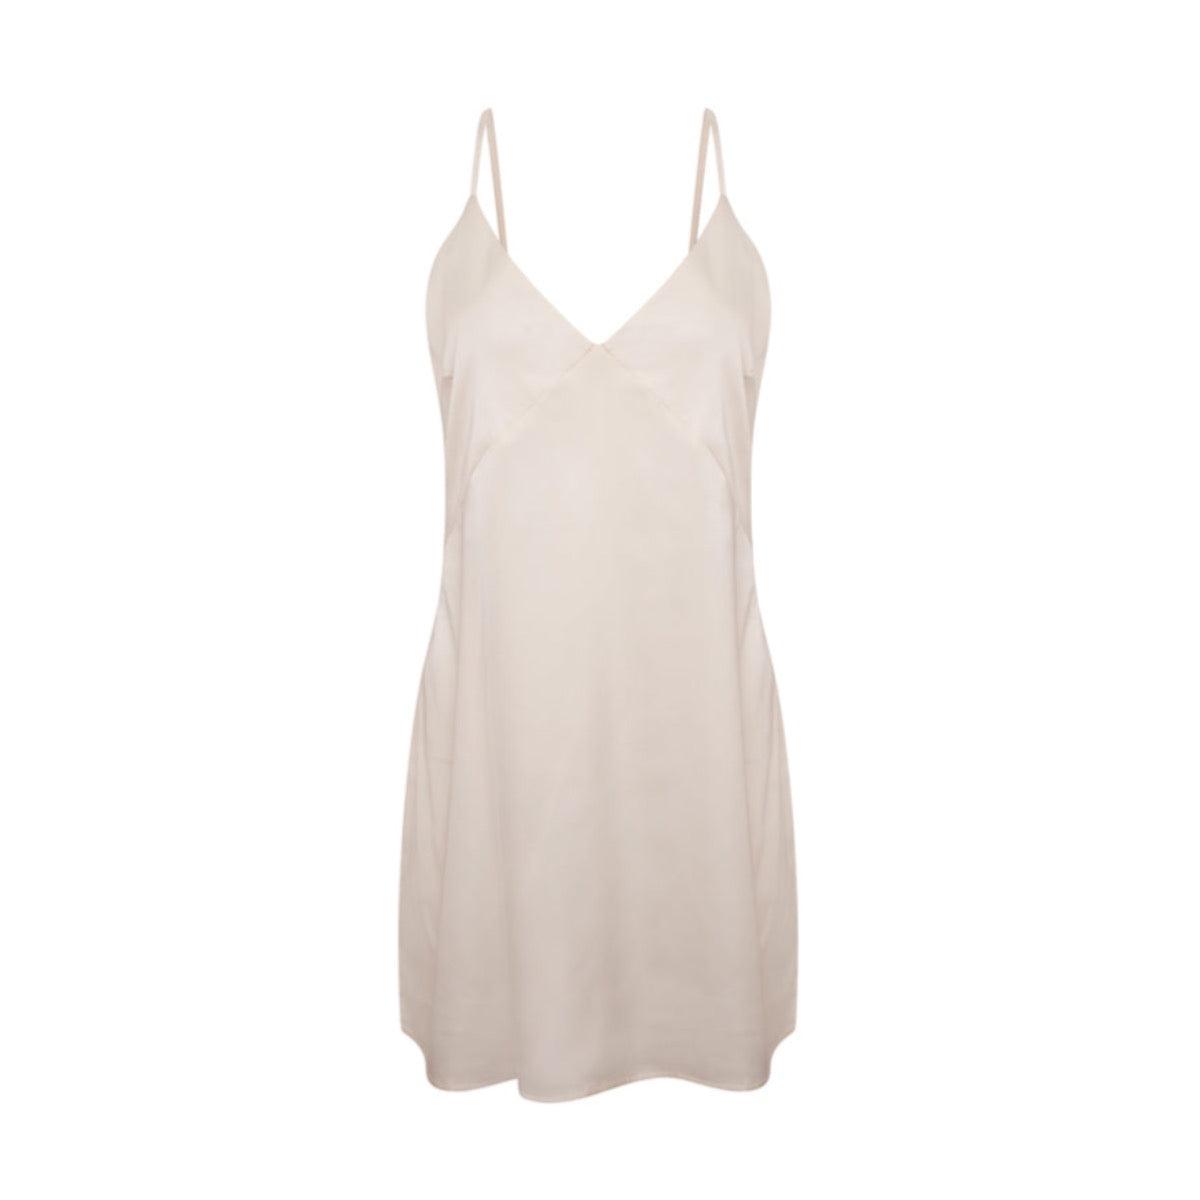 Cross Back Camisole Night Dress- Ivory - The NAP Co.